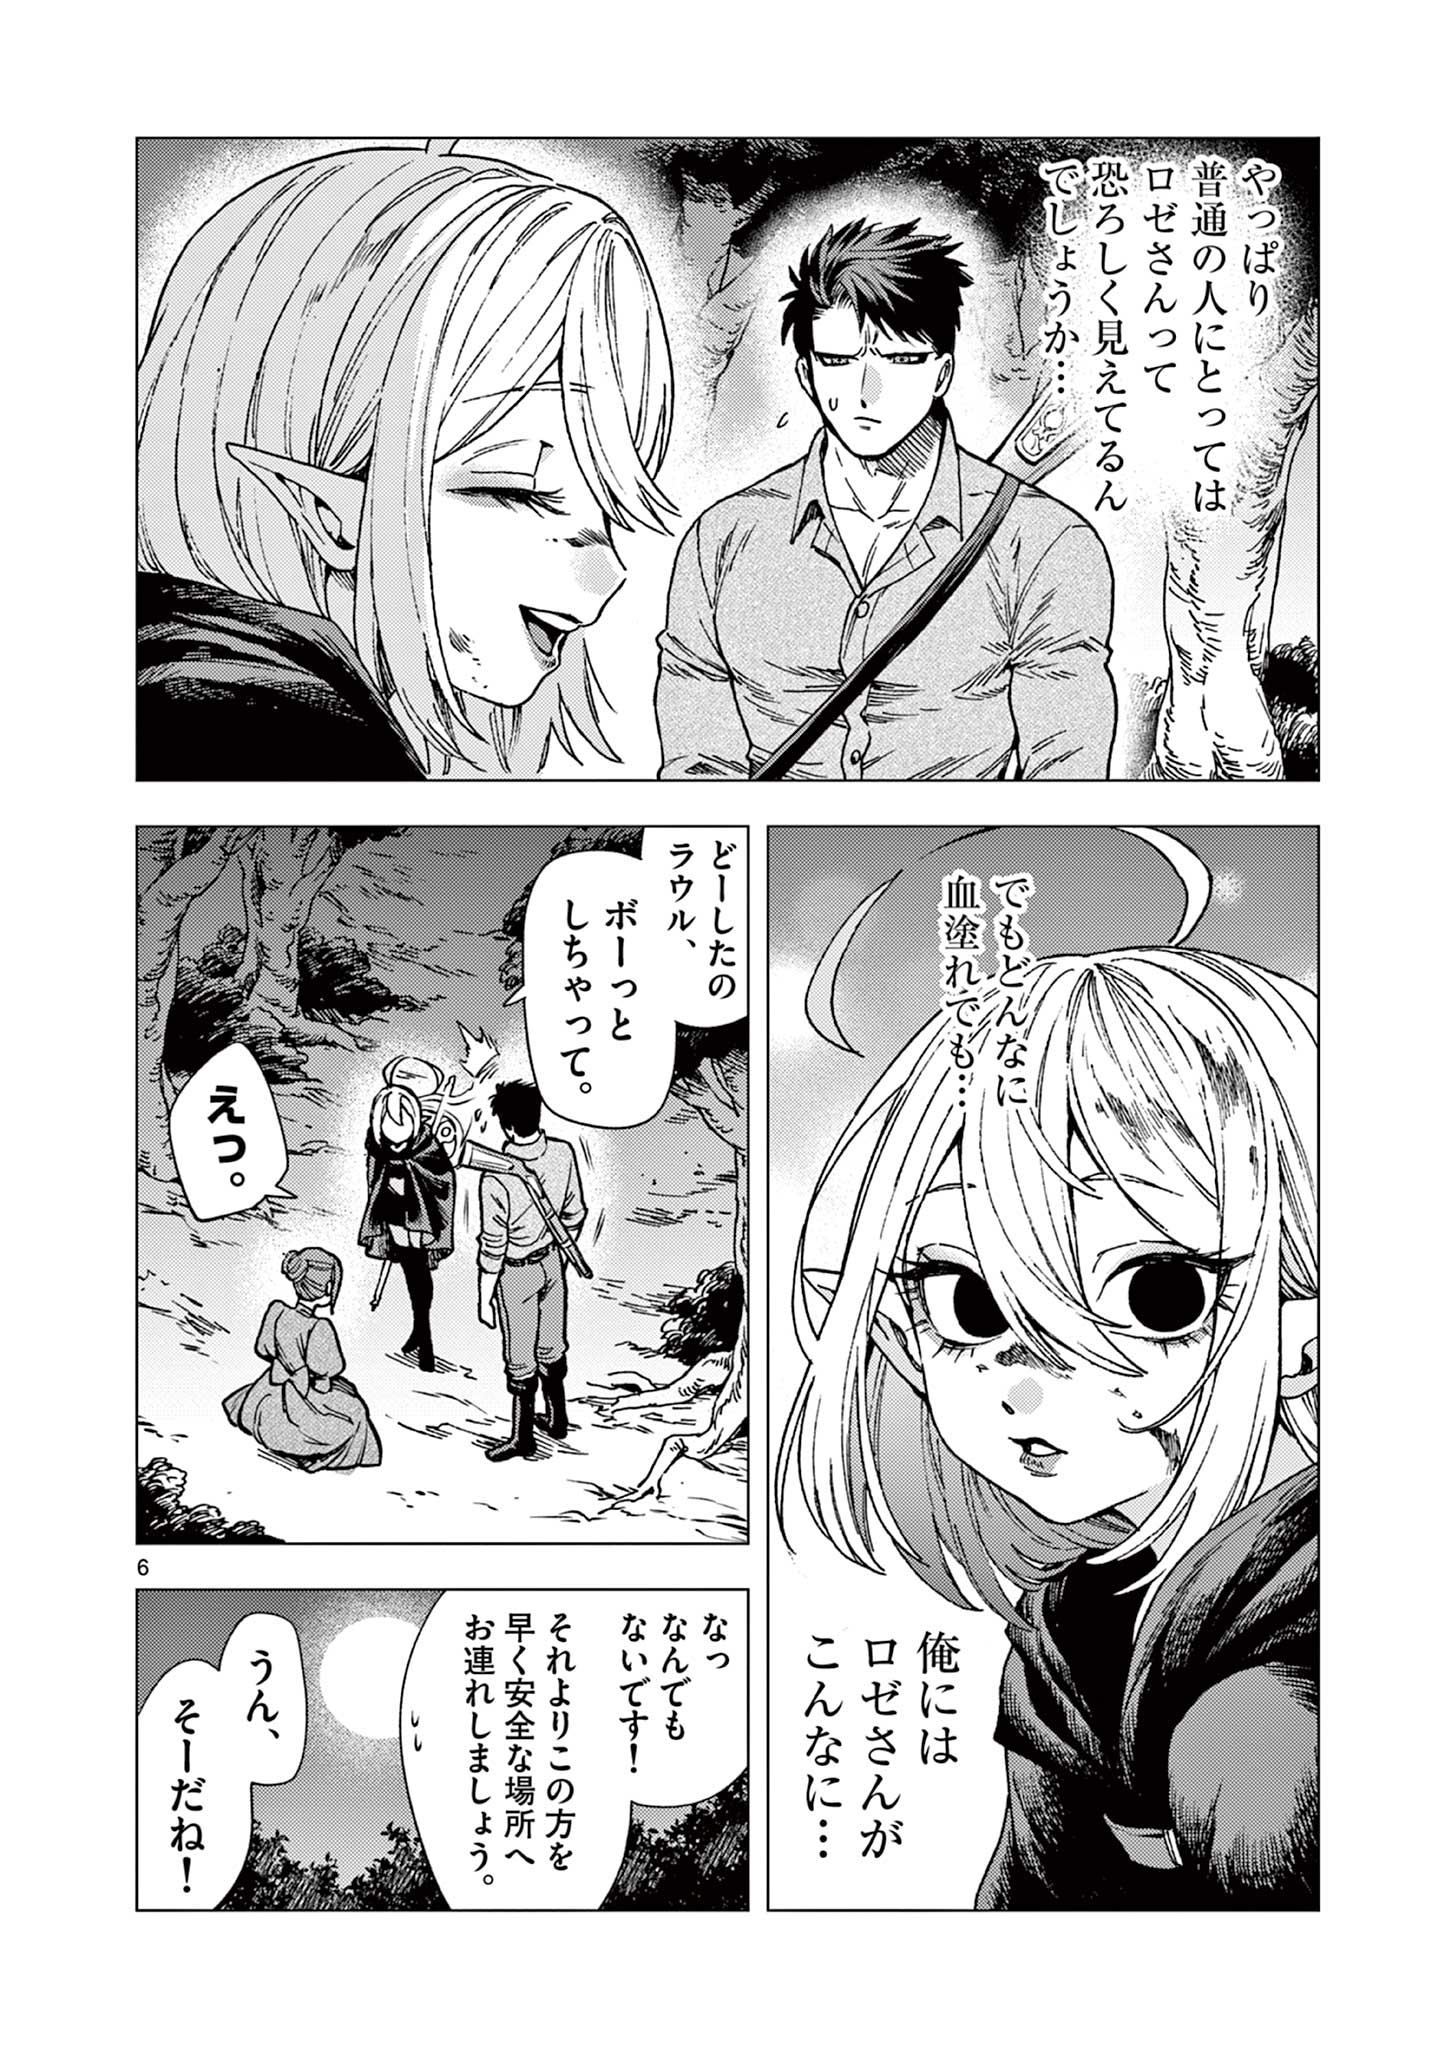 Raul to Kyuuketsuki - Chapter 2 - Page 6